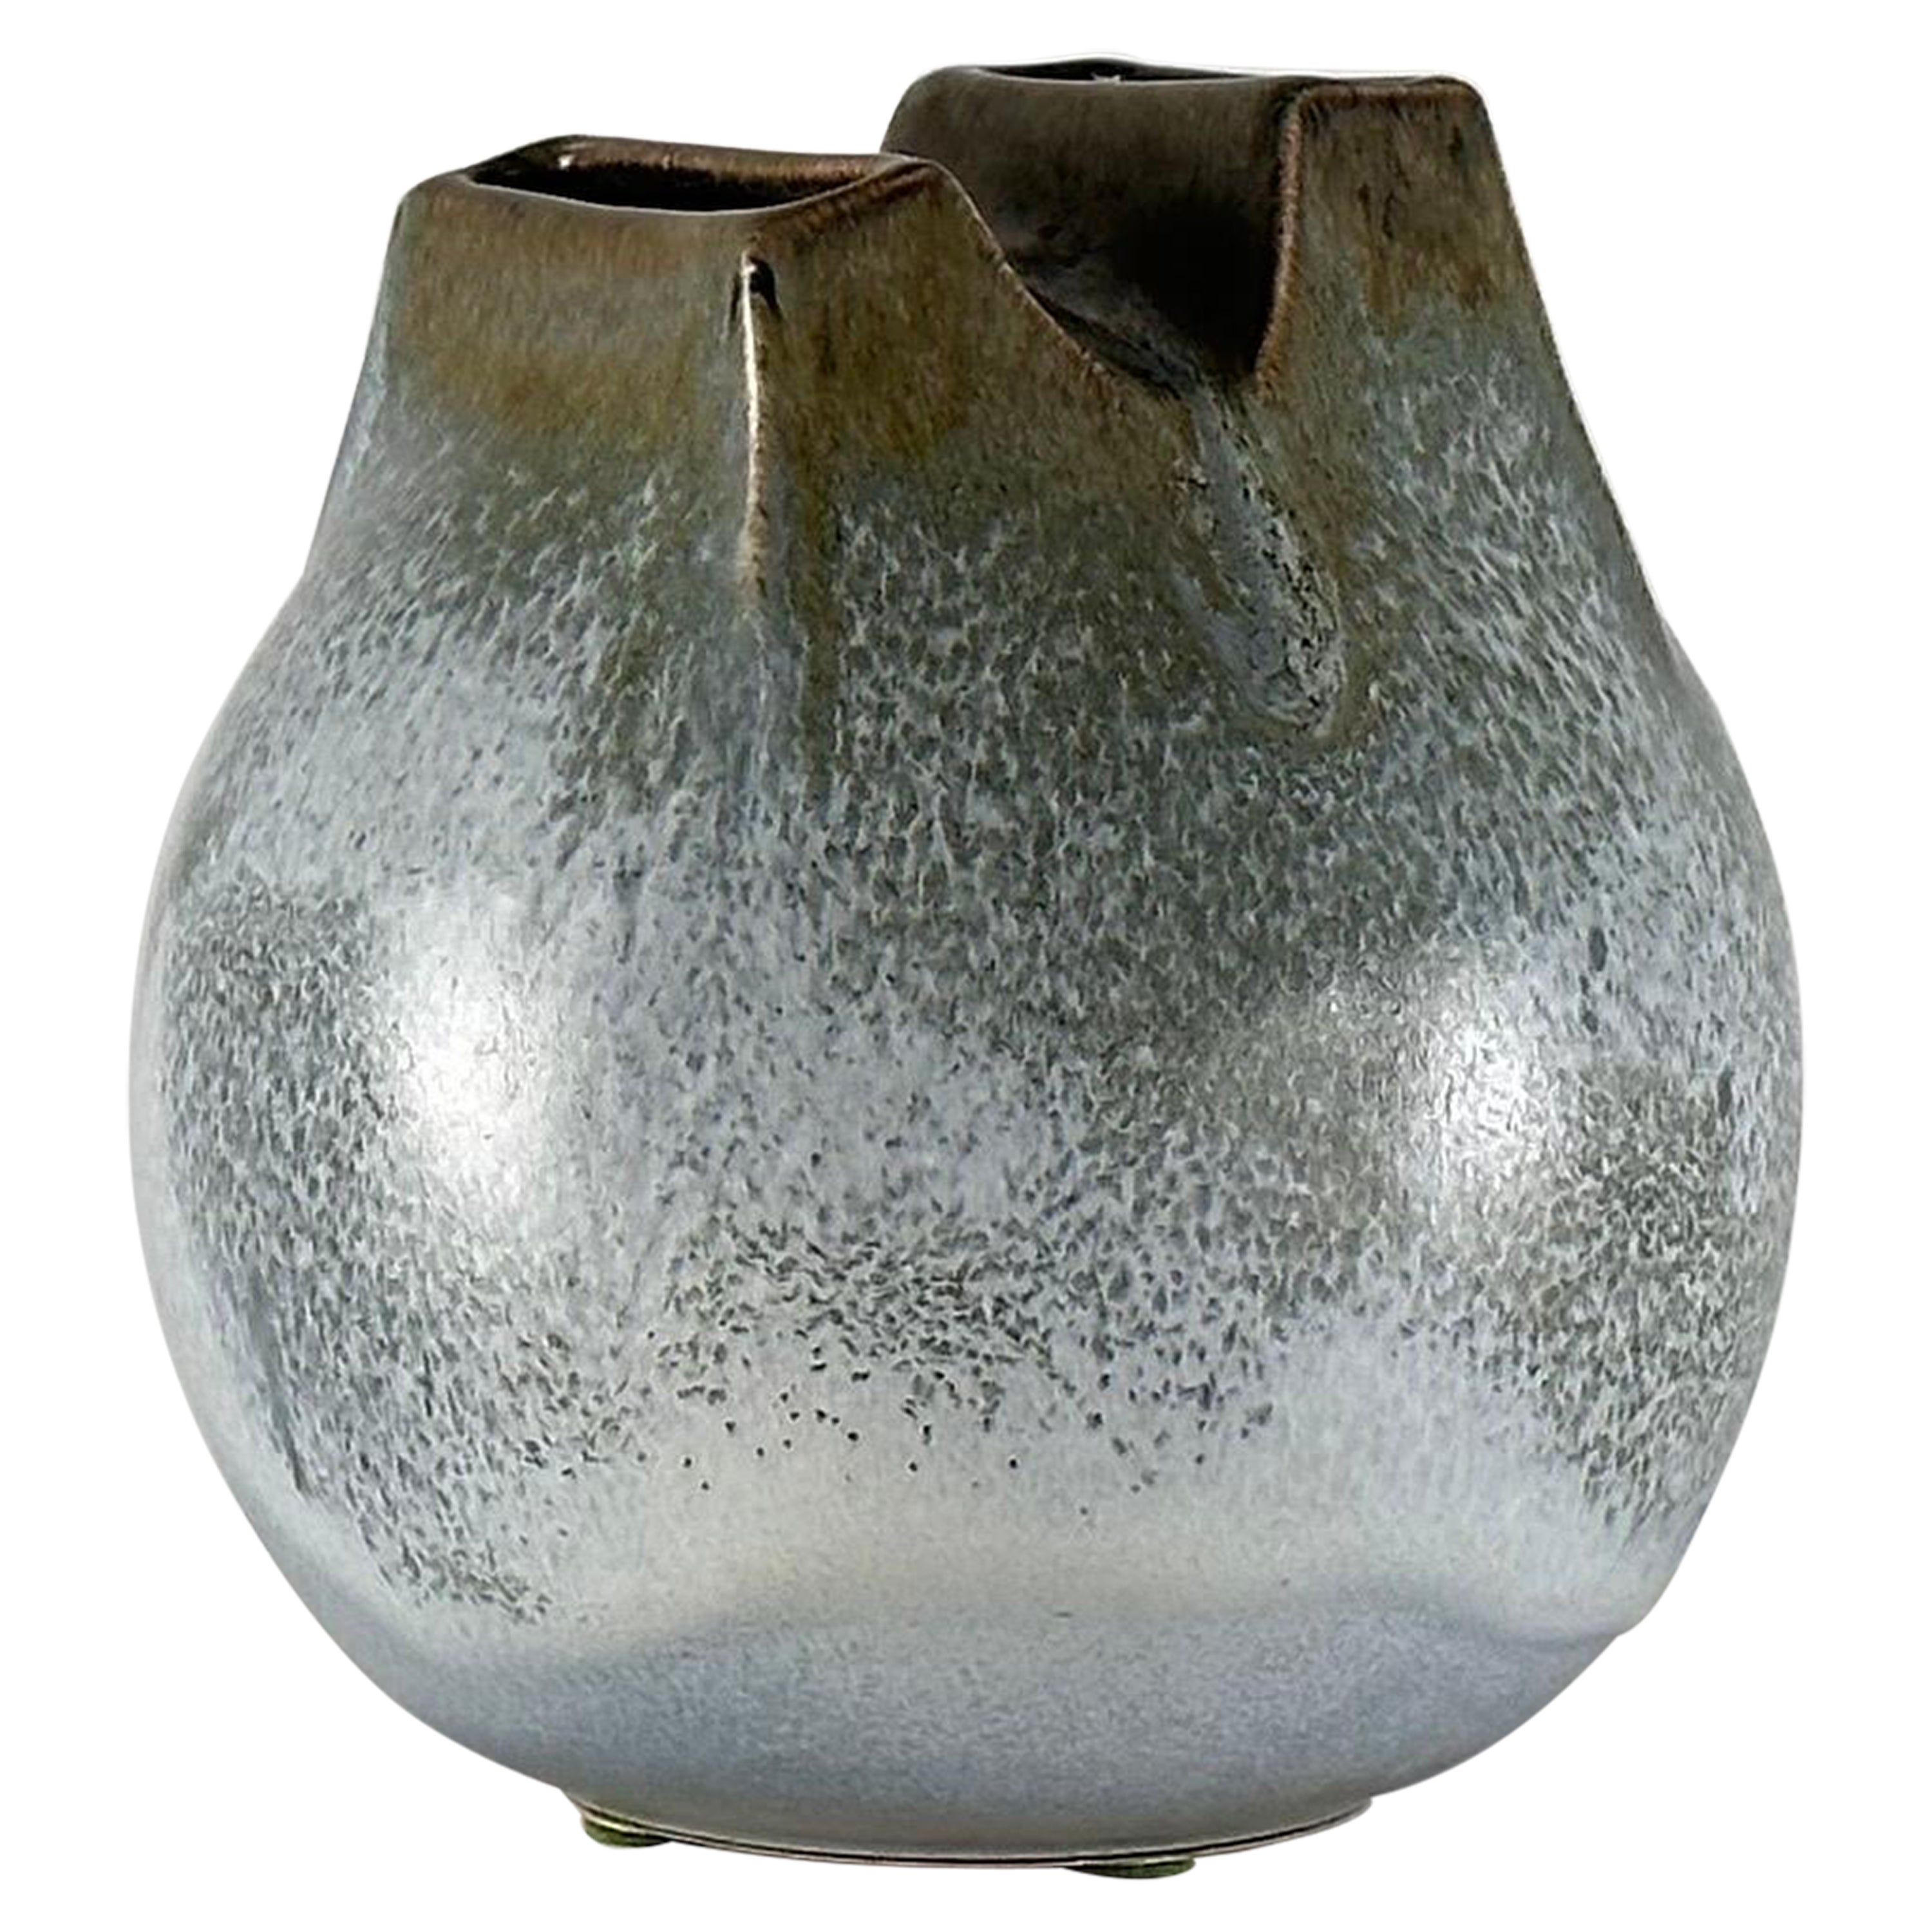 Unique 1970s Franco Bucci Ceramic Vase: 'Whistle' with Two Mouths For Sale